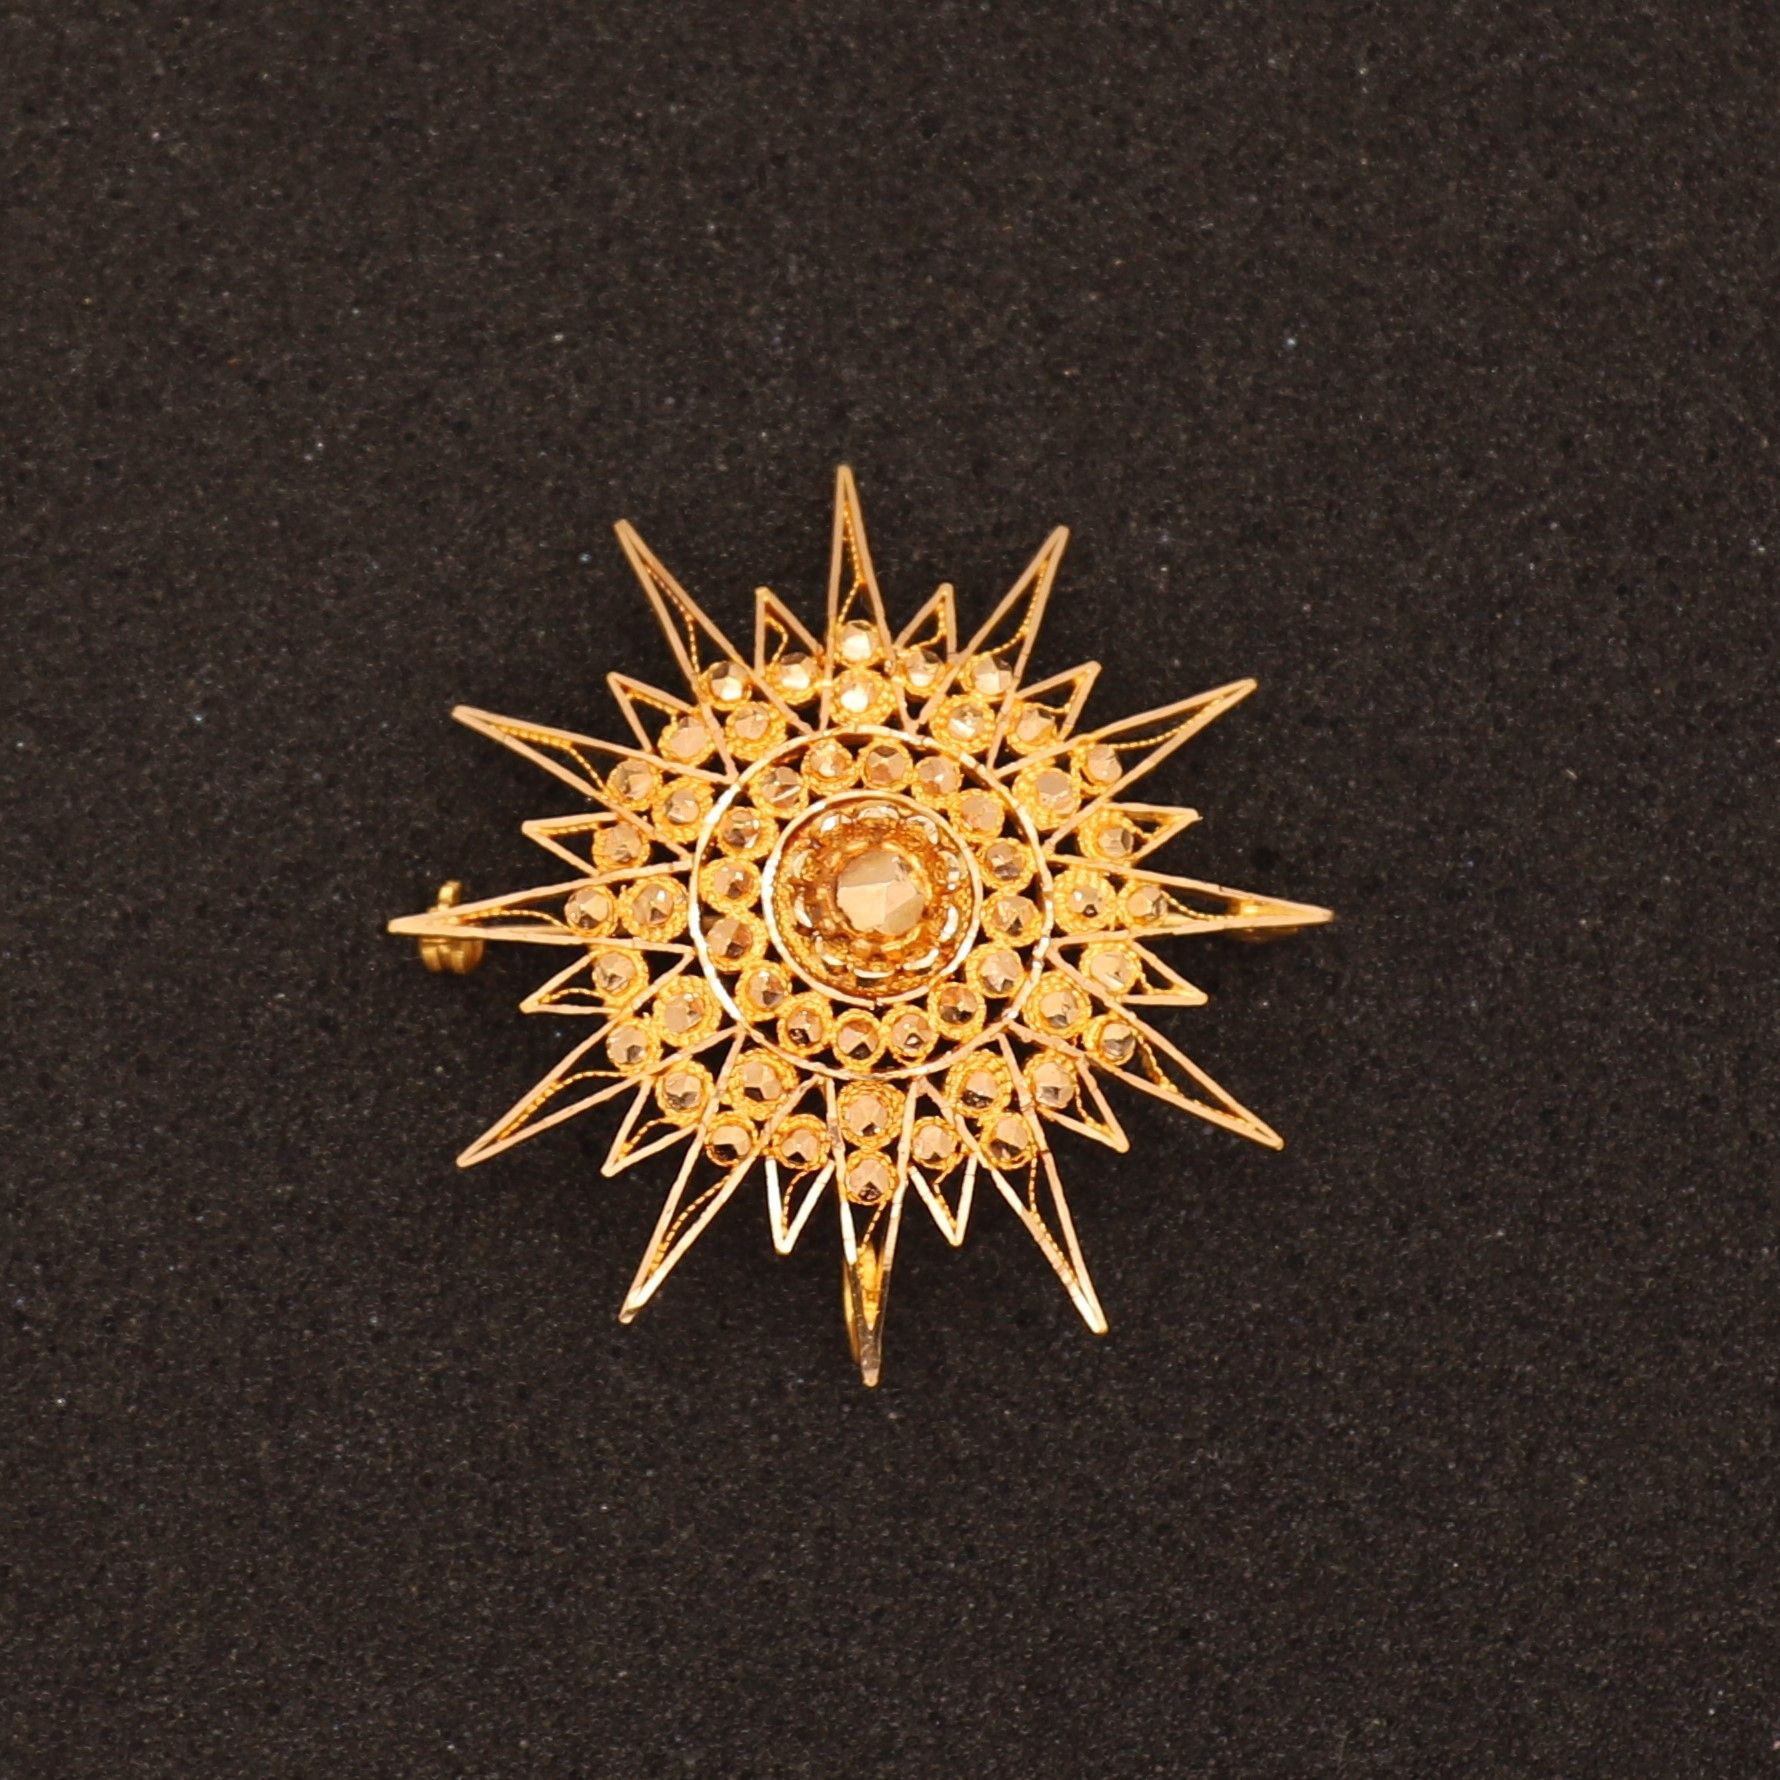 Null 阿斯马拉太阳 "胸针-18K黄金吊坠

12支

直径：5厘米

重量 : 15,6 grs